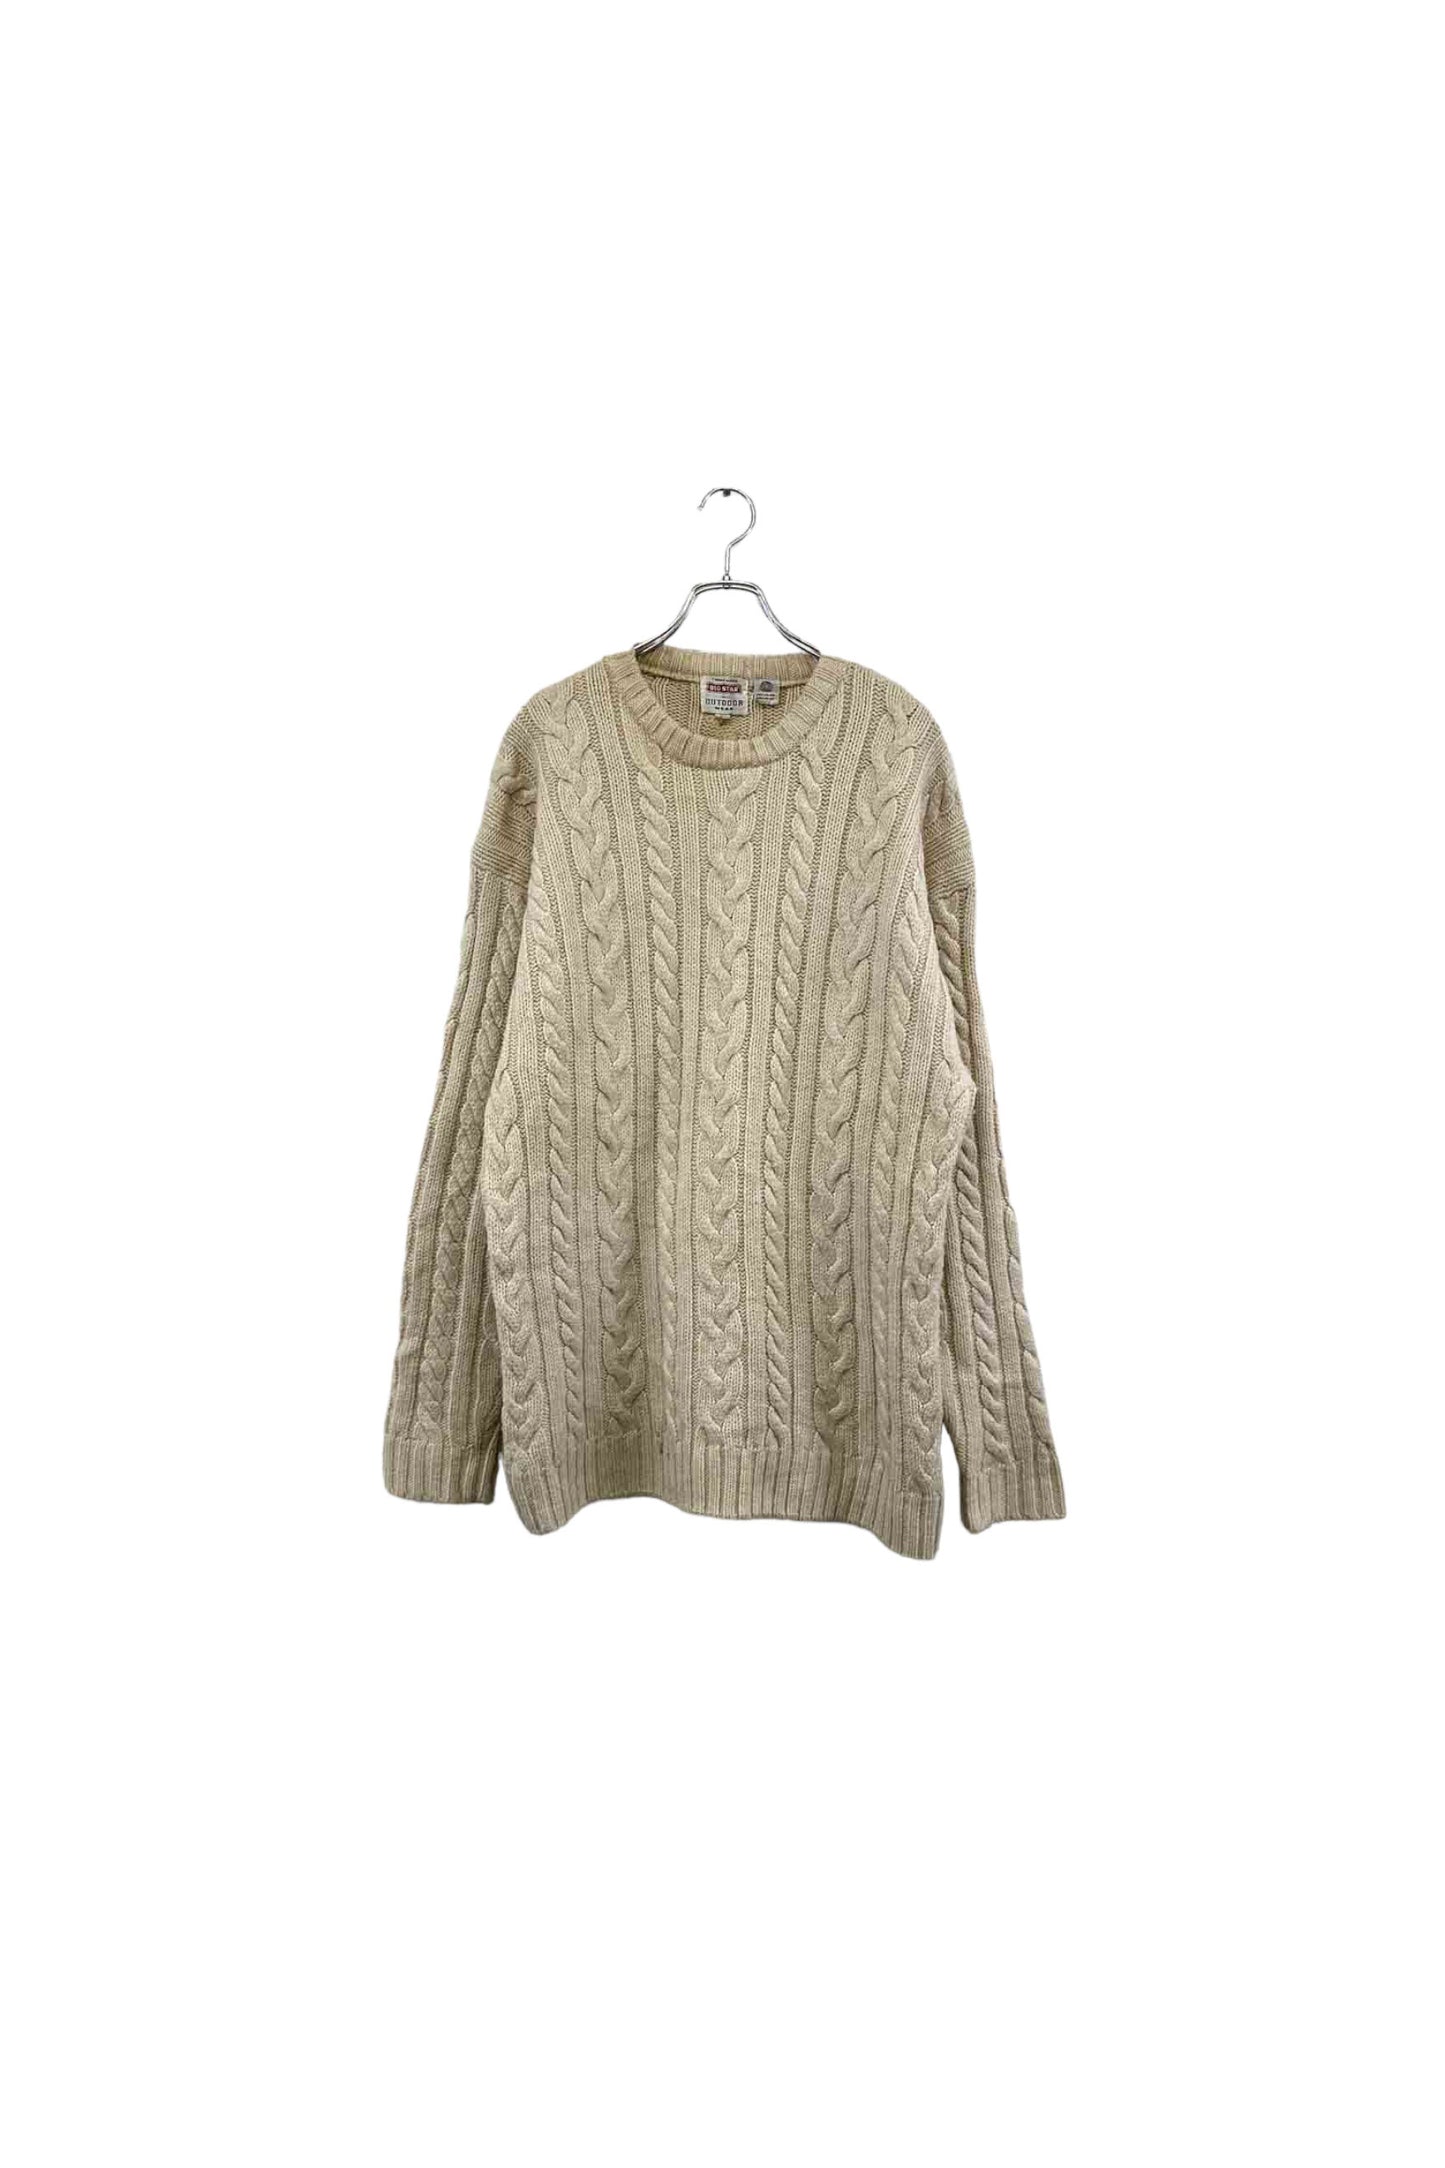 BIG STAR white wool sweater